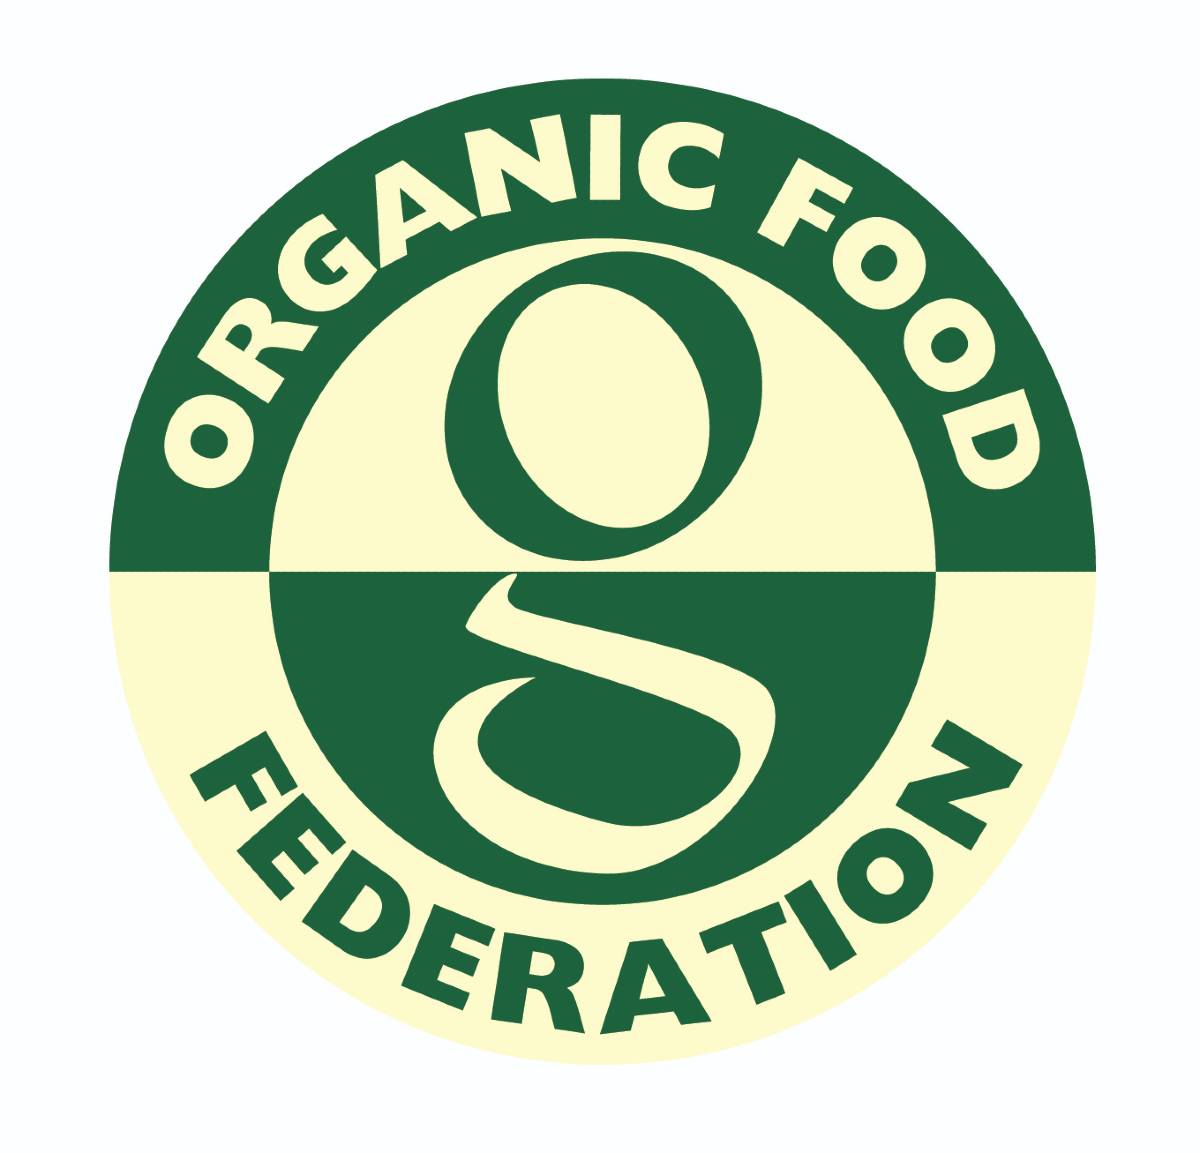 organic food federation logo for organic food and drink